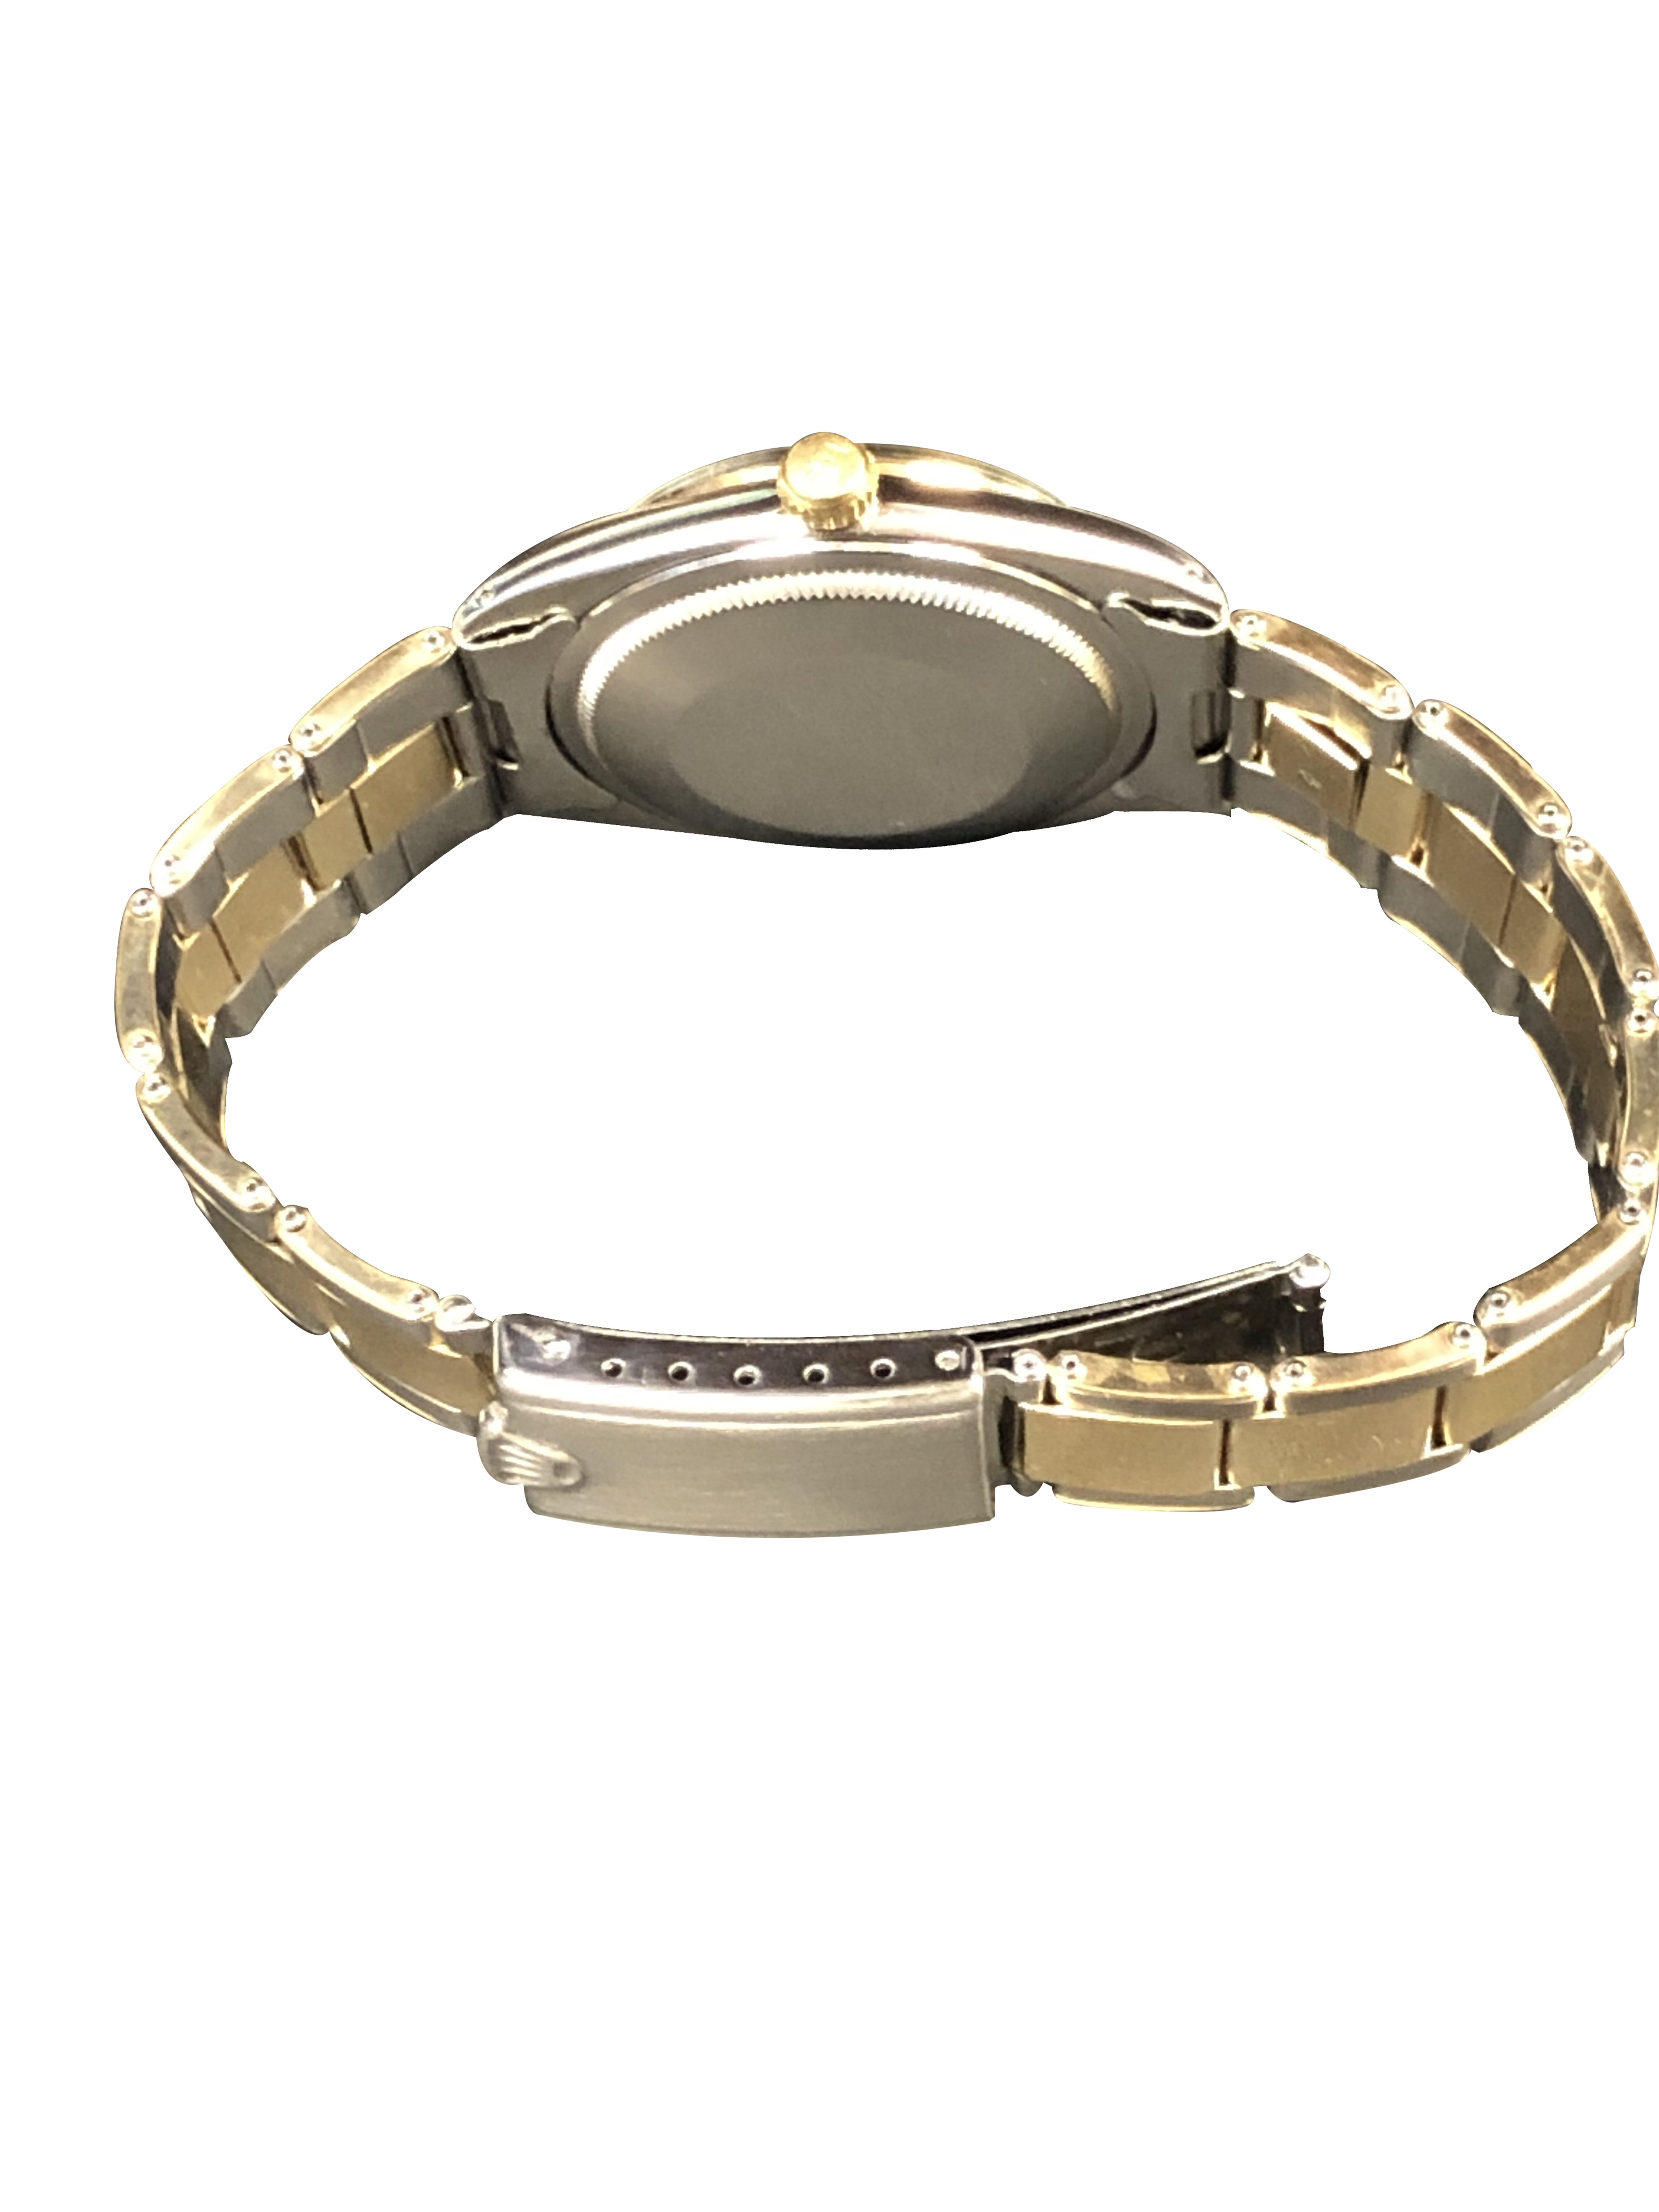 bertram 22k gold plated watch price